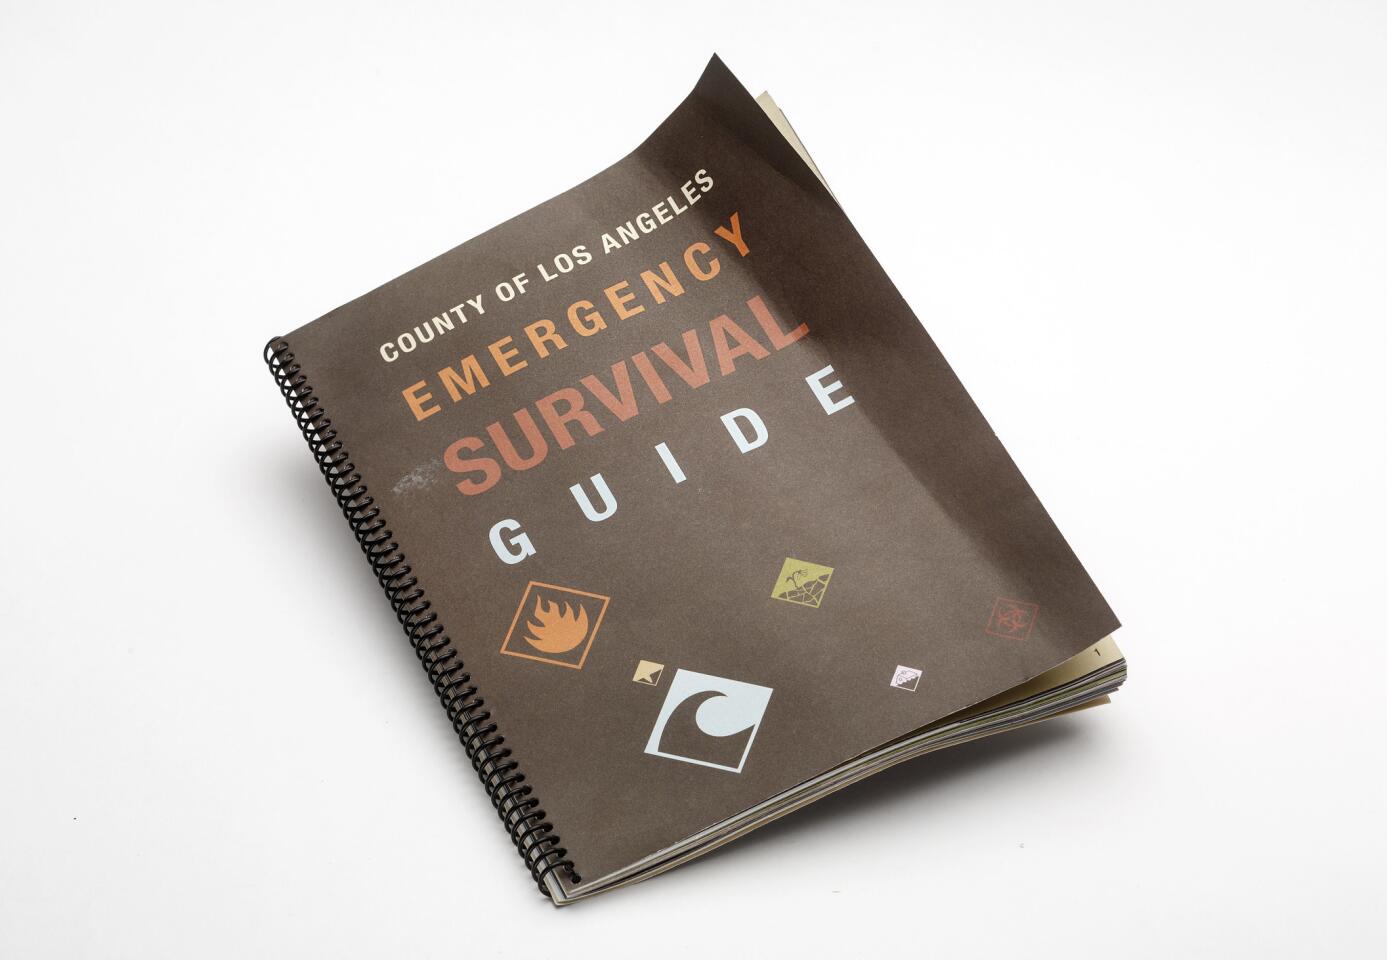 Earthquake survival guide